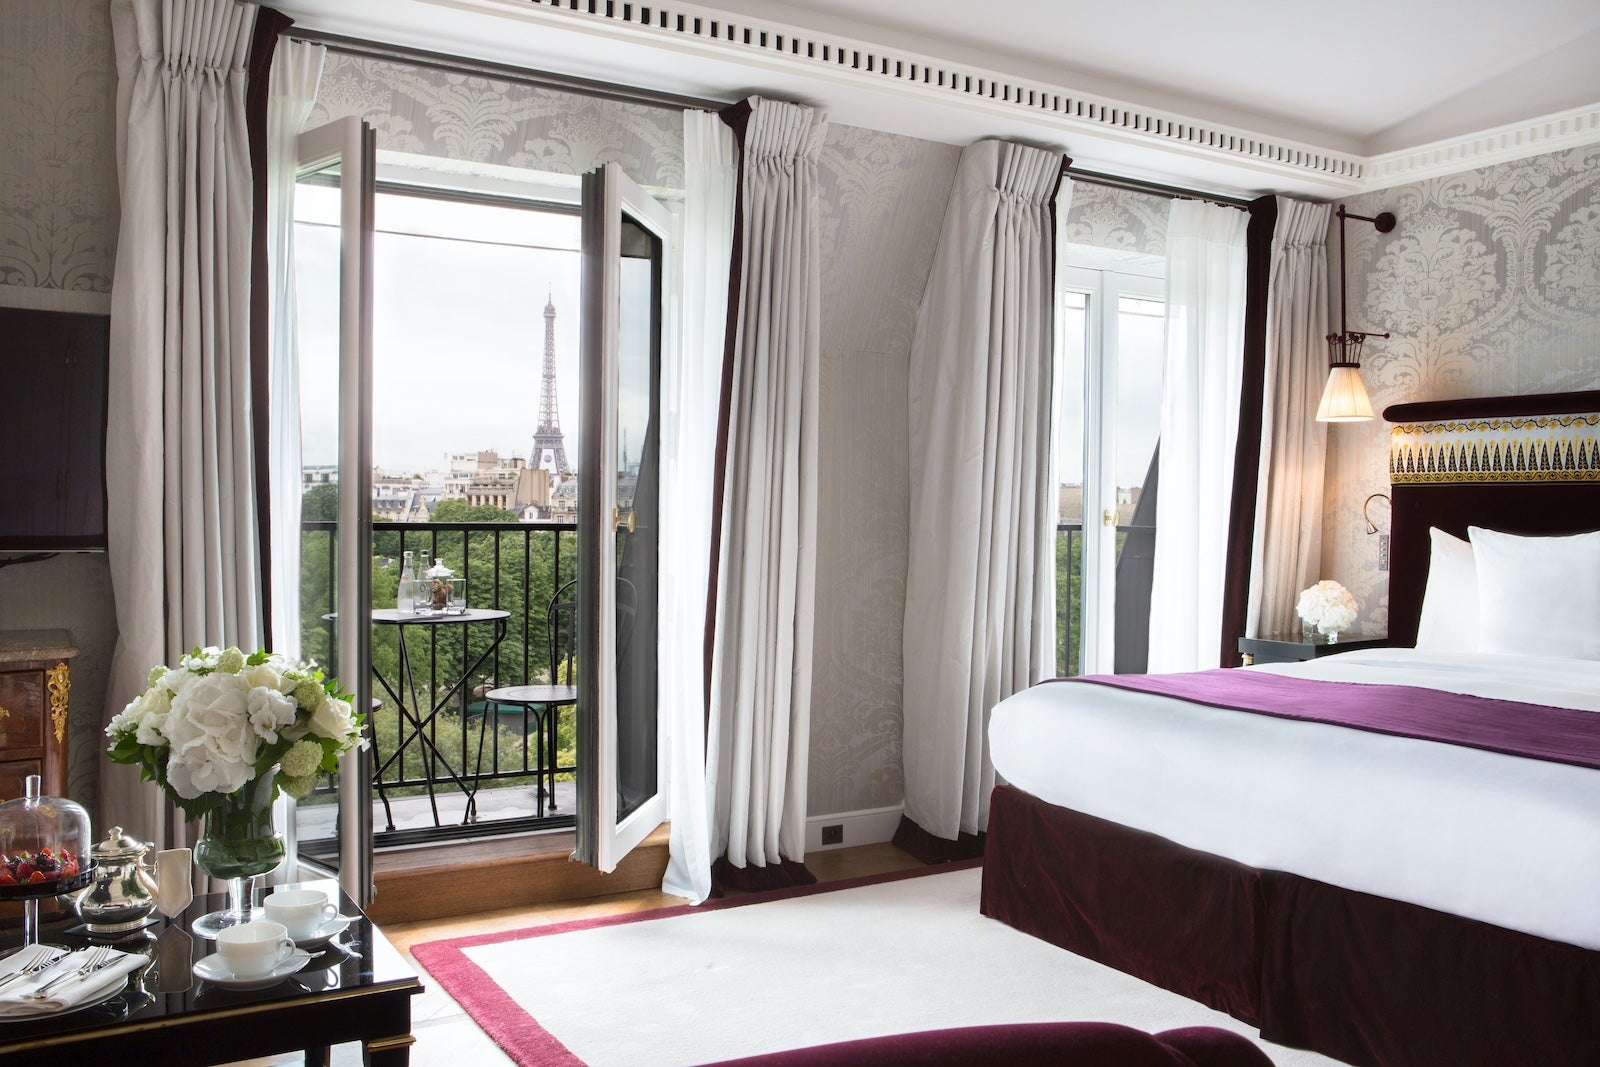 a luxury hotel room with balcony doors open